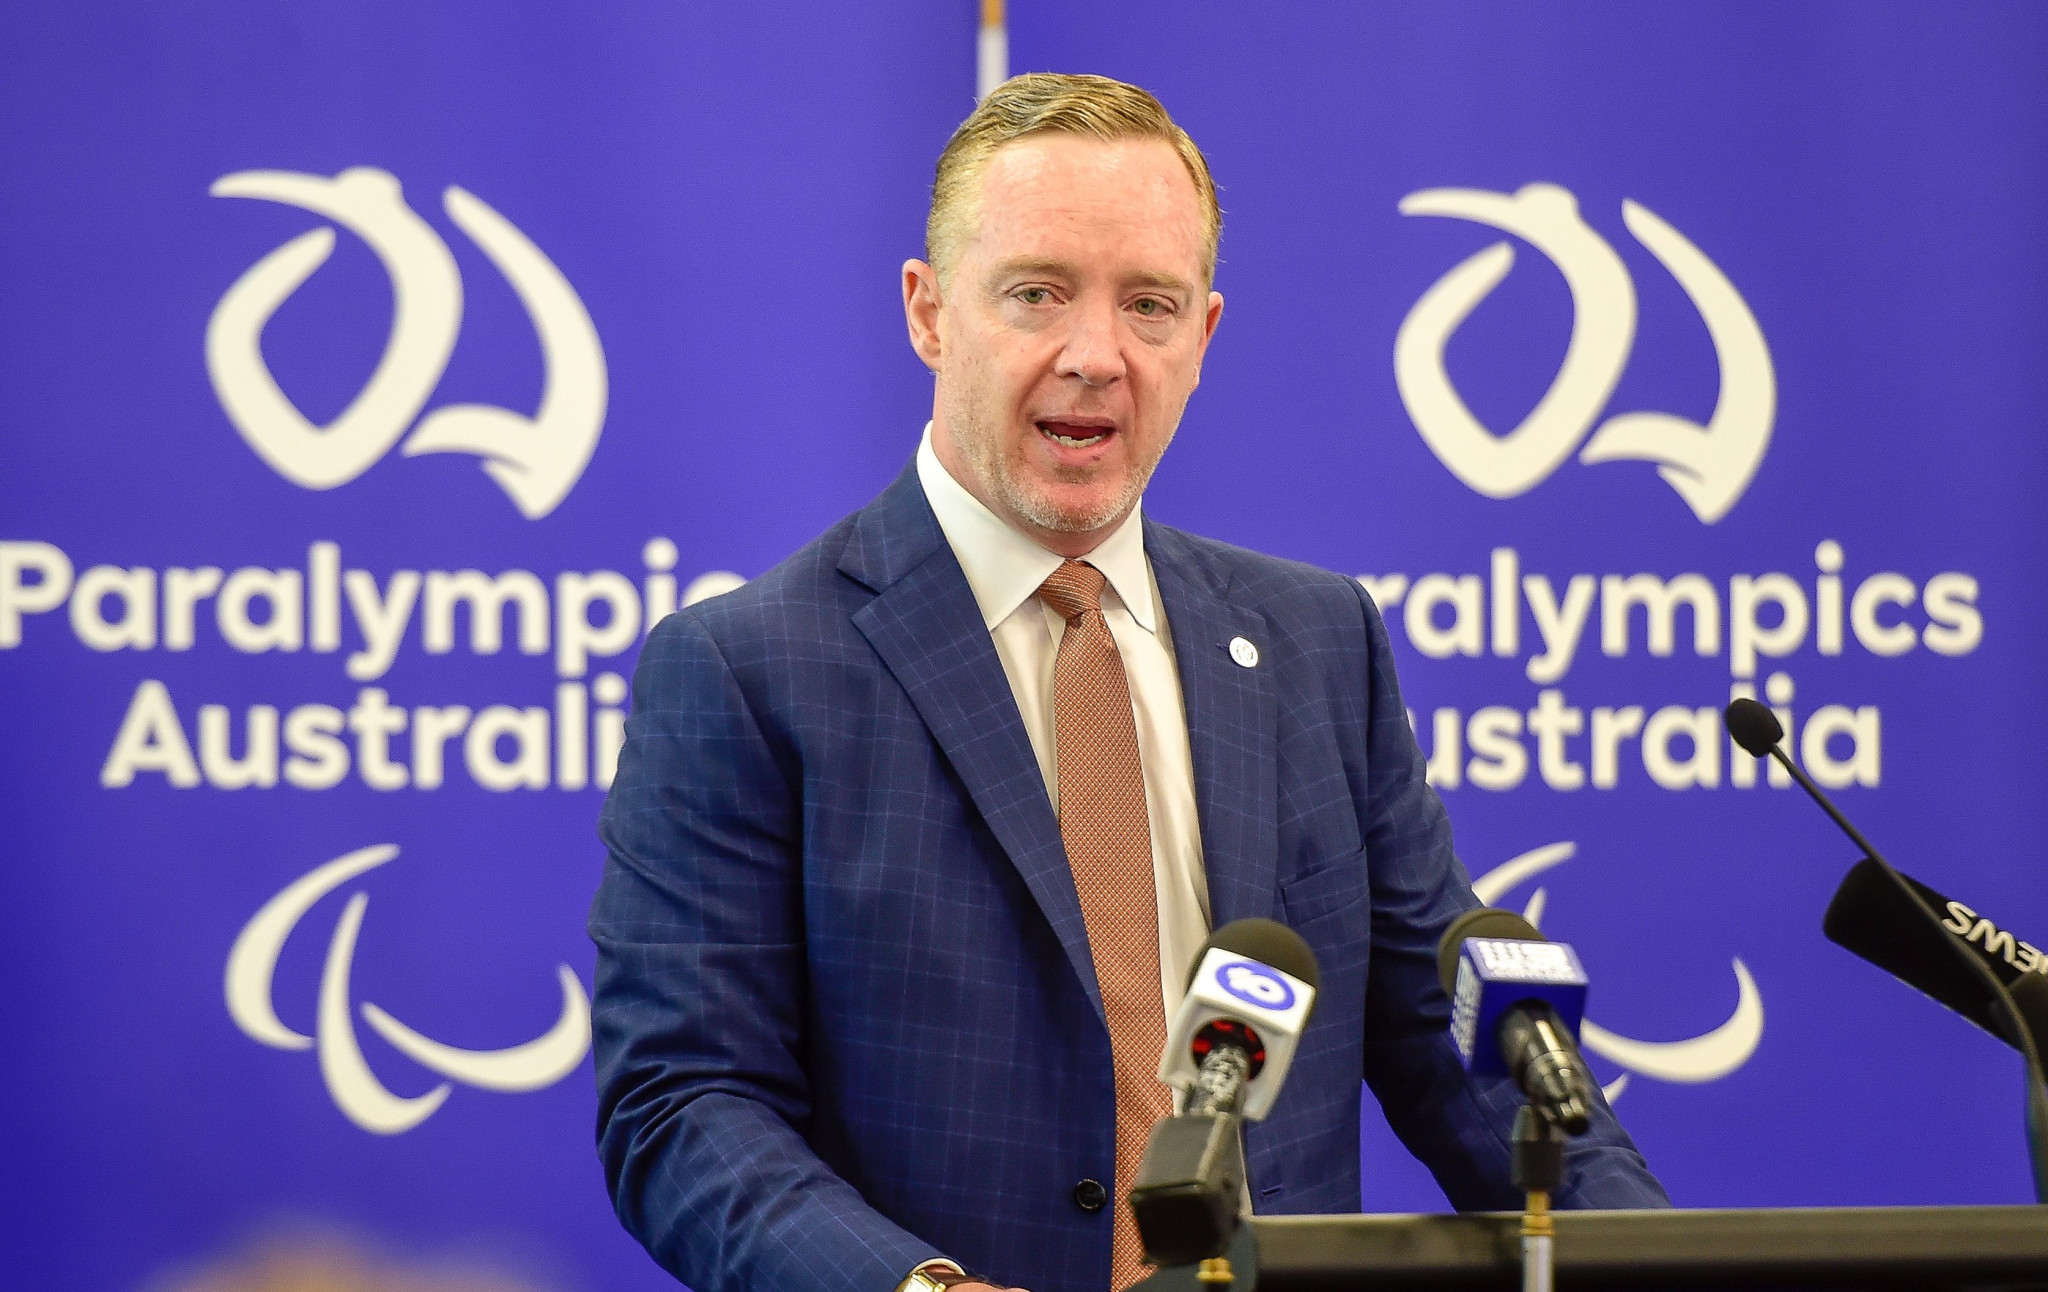 Paralympics Australia President Jock O’Callaghan hailed today's funding announcement as an historic day ©Paralympics Australia